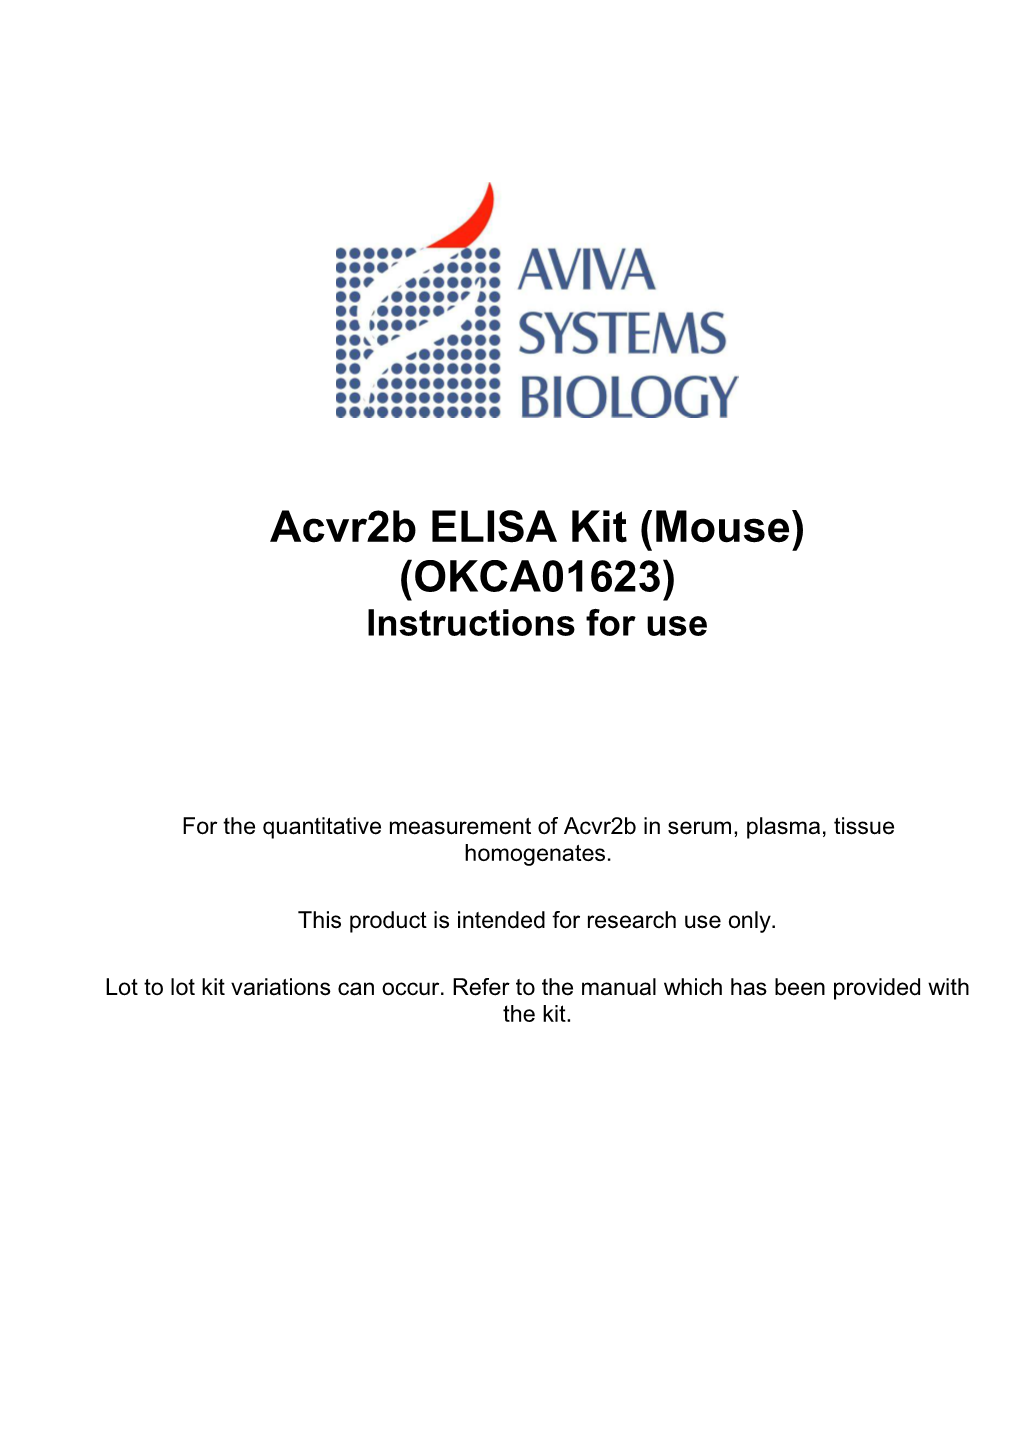 Acvr2b ELISA Kit (Mouse) (OKCA01623) Instructions for Use